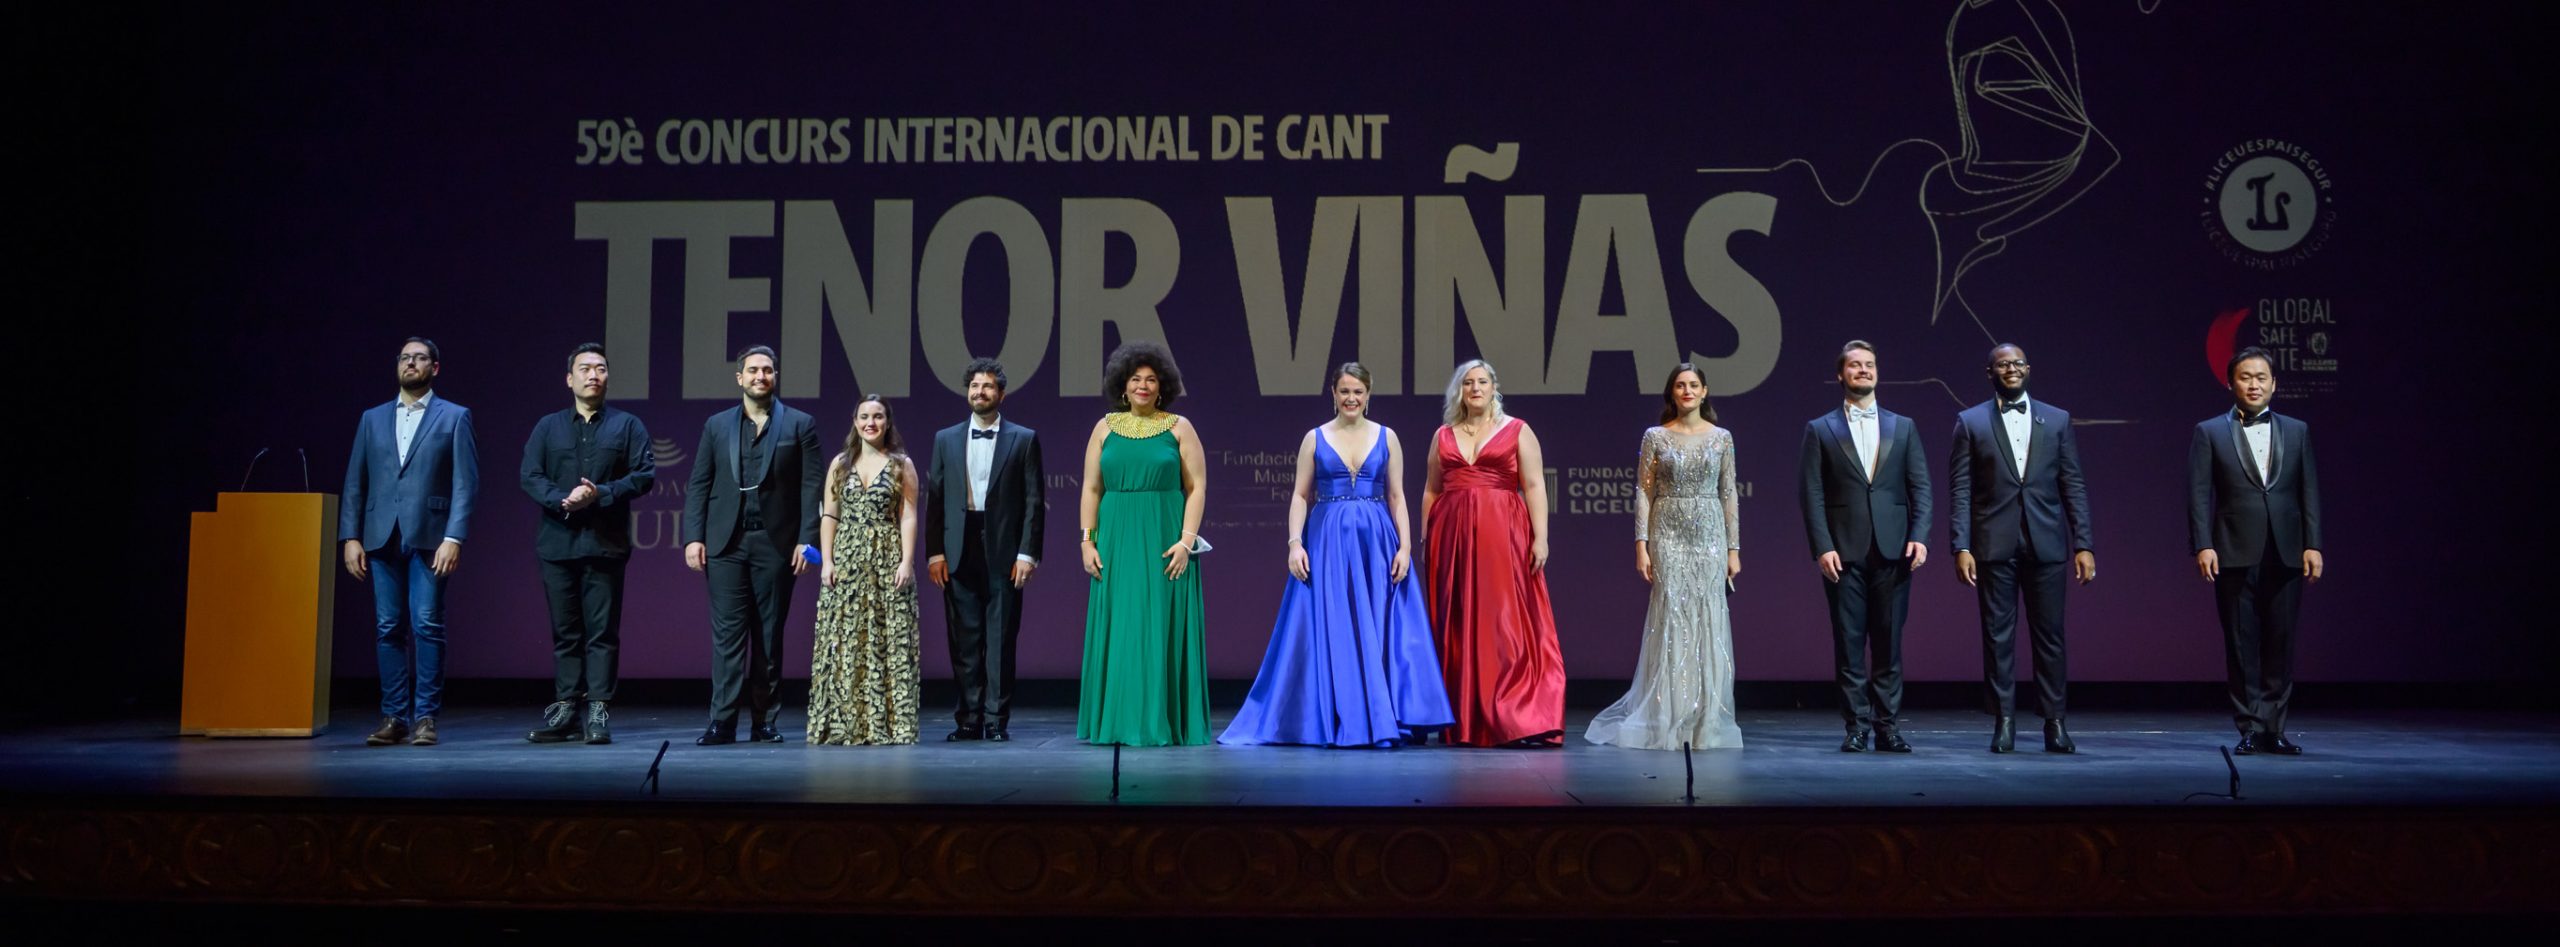 La soprano britànica Gemma Summerfield guanya el Primer Premi Tenor Viñas